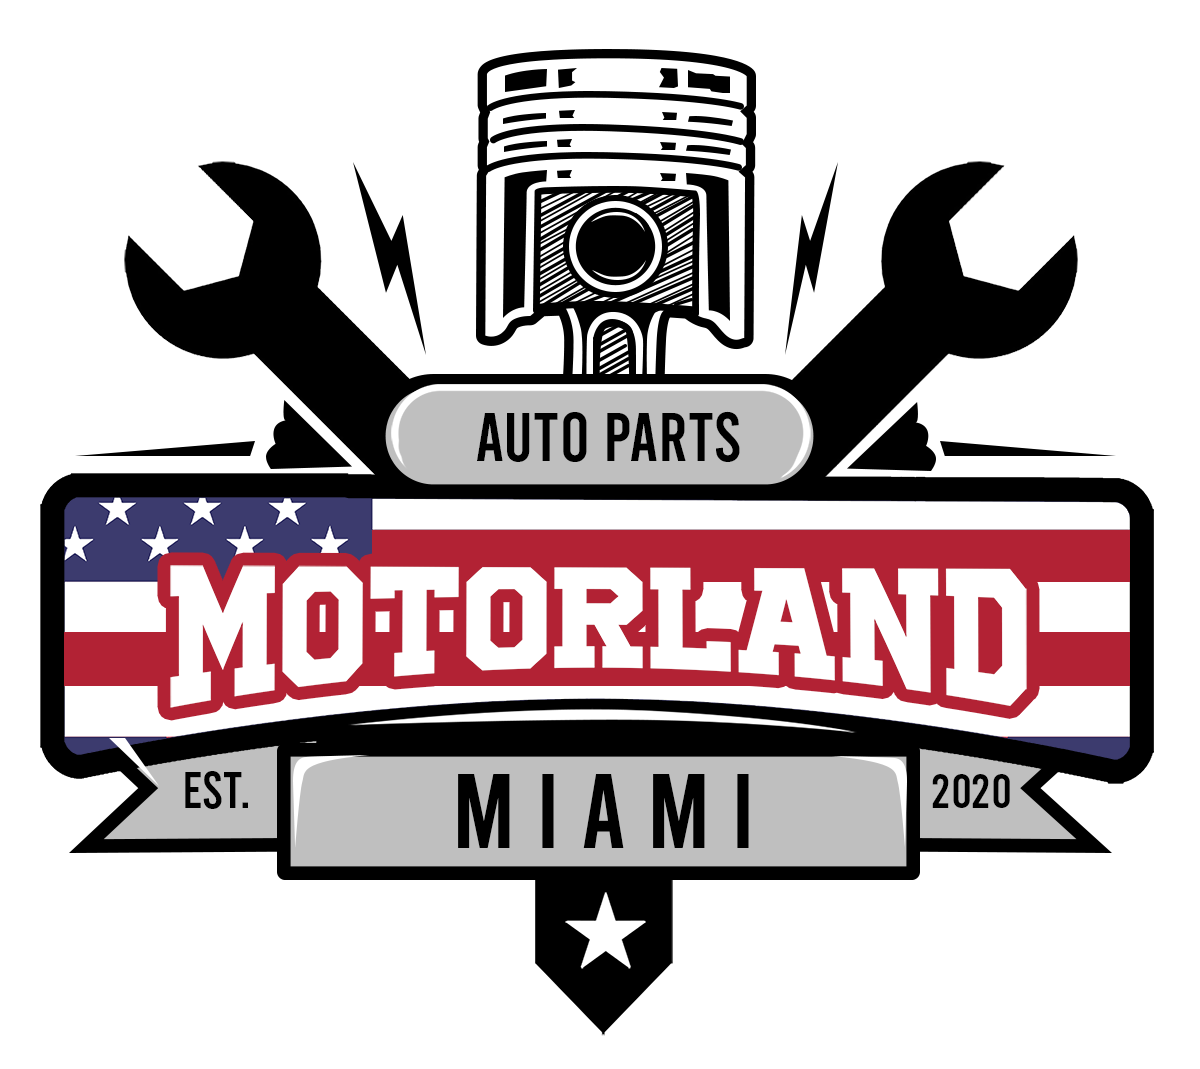 Motorland Miami Corp